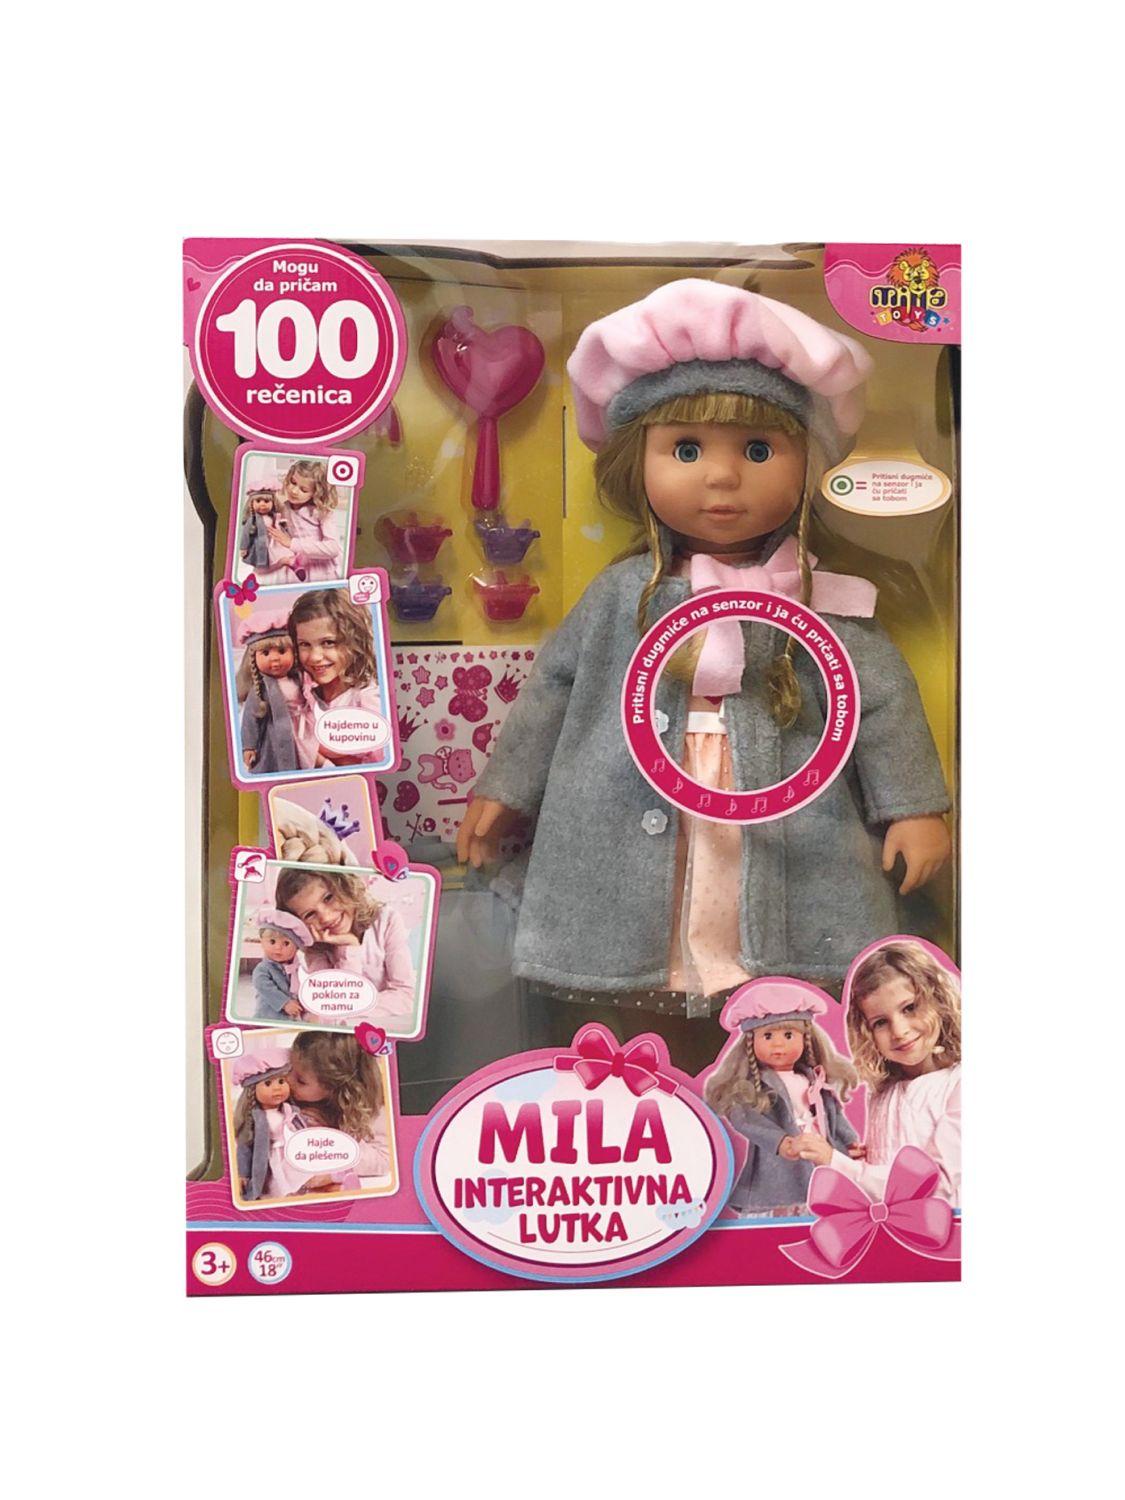 MILLA TOYS Interaktivna lutka Mila sa 100 rečenica